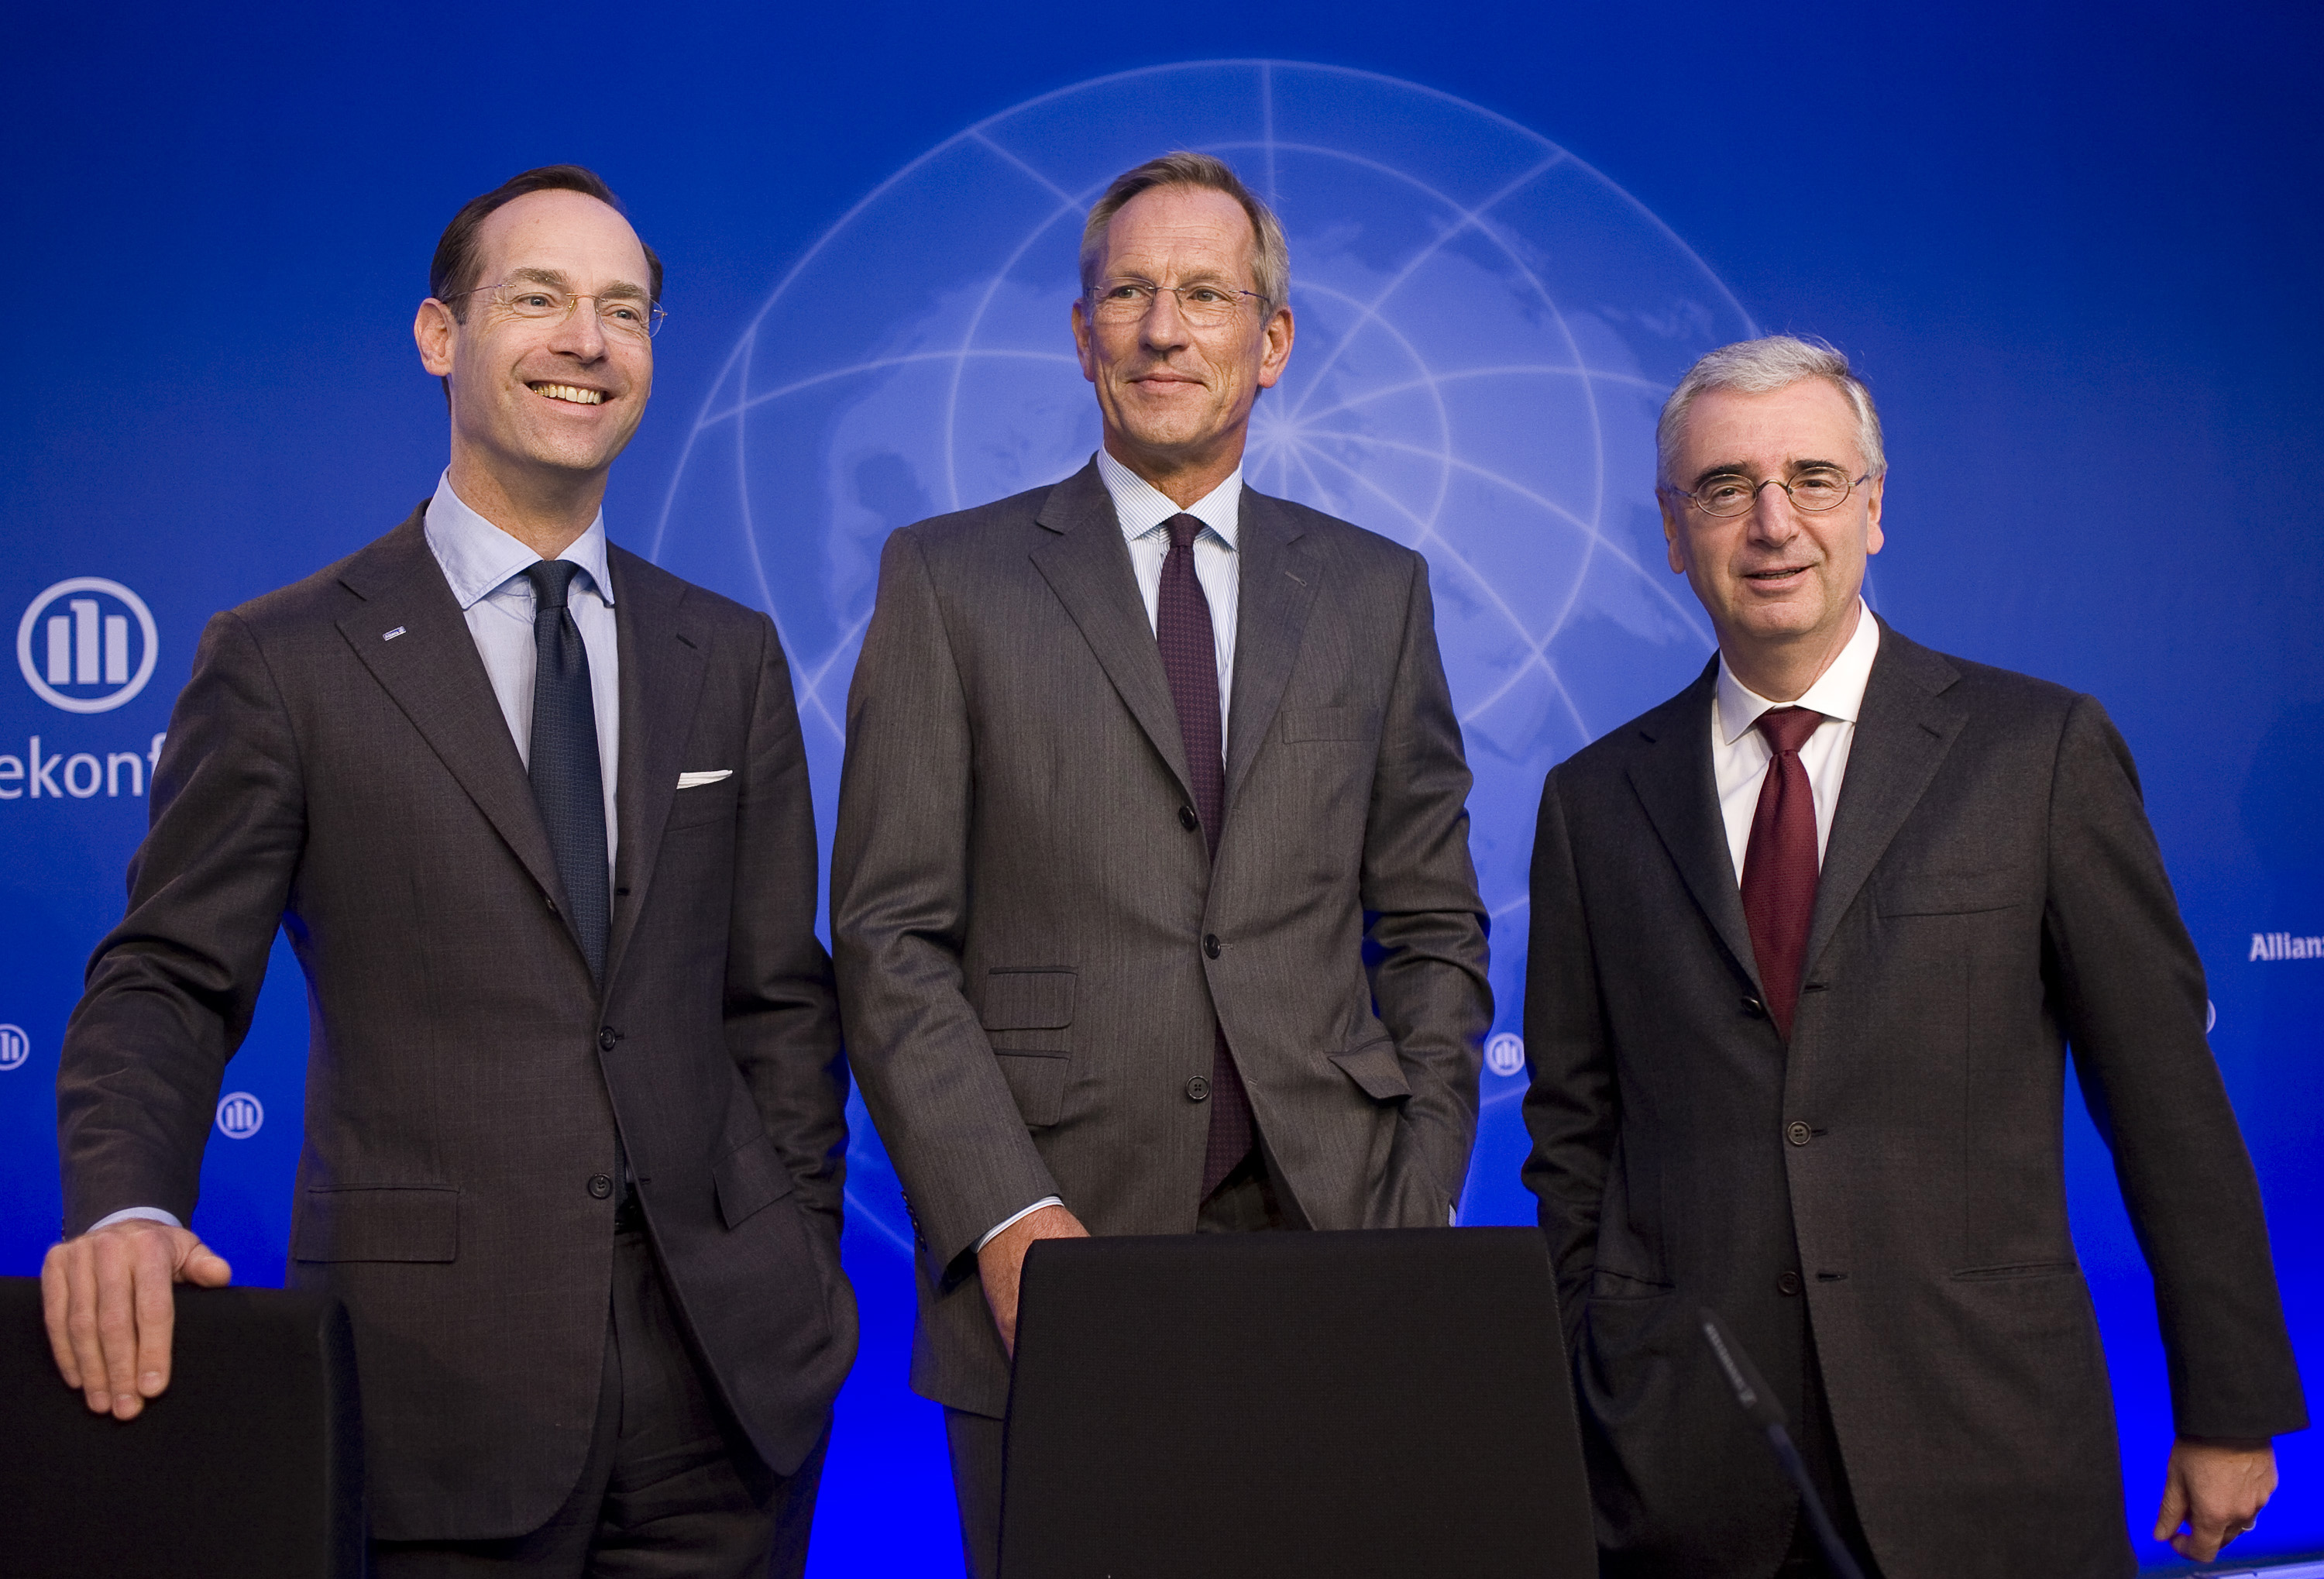 From left: Oliver Bäte, Michael Diekmann, Paul Achleitner